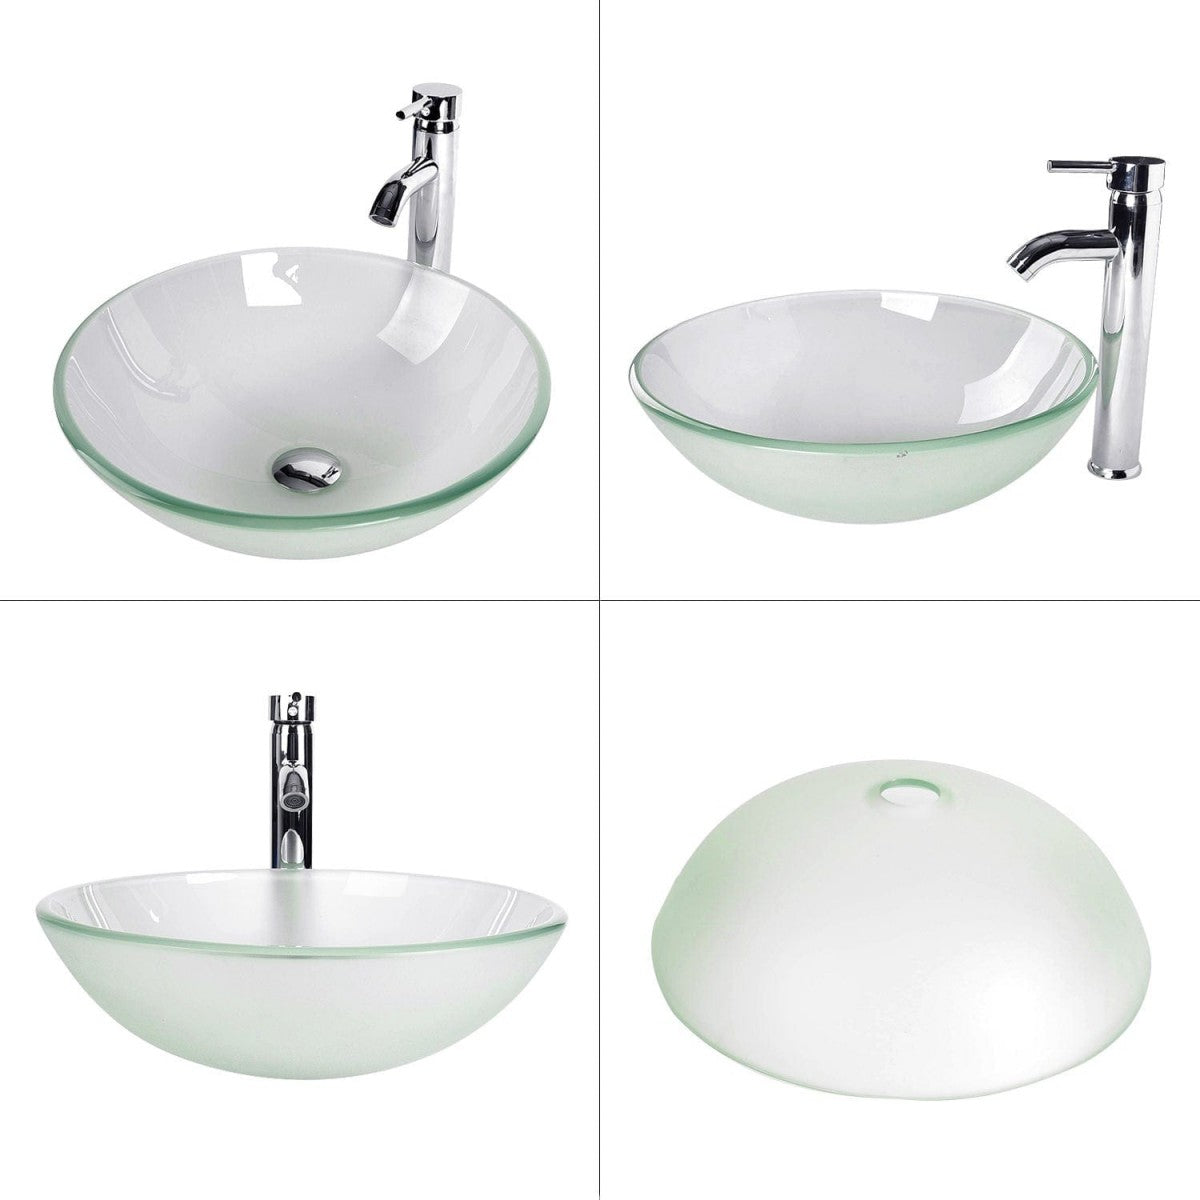 4 angle views of Elecwish Glass Round Sink